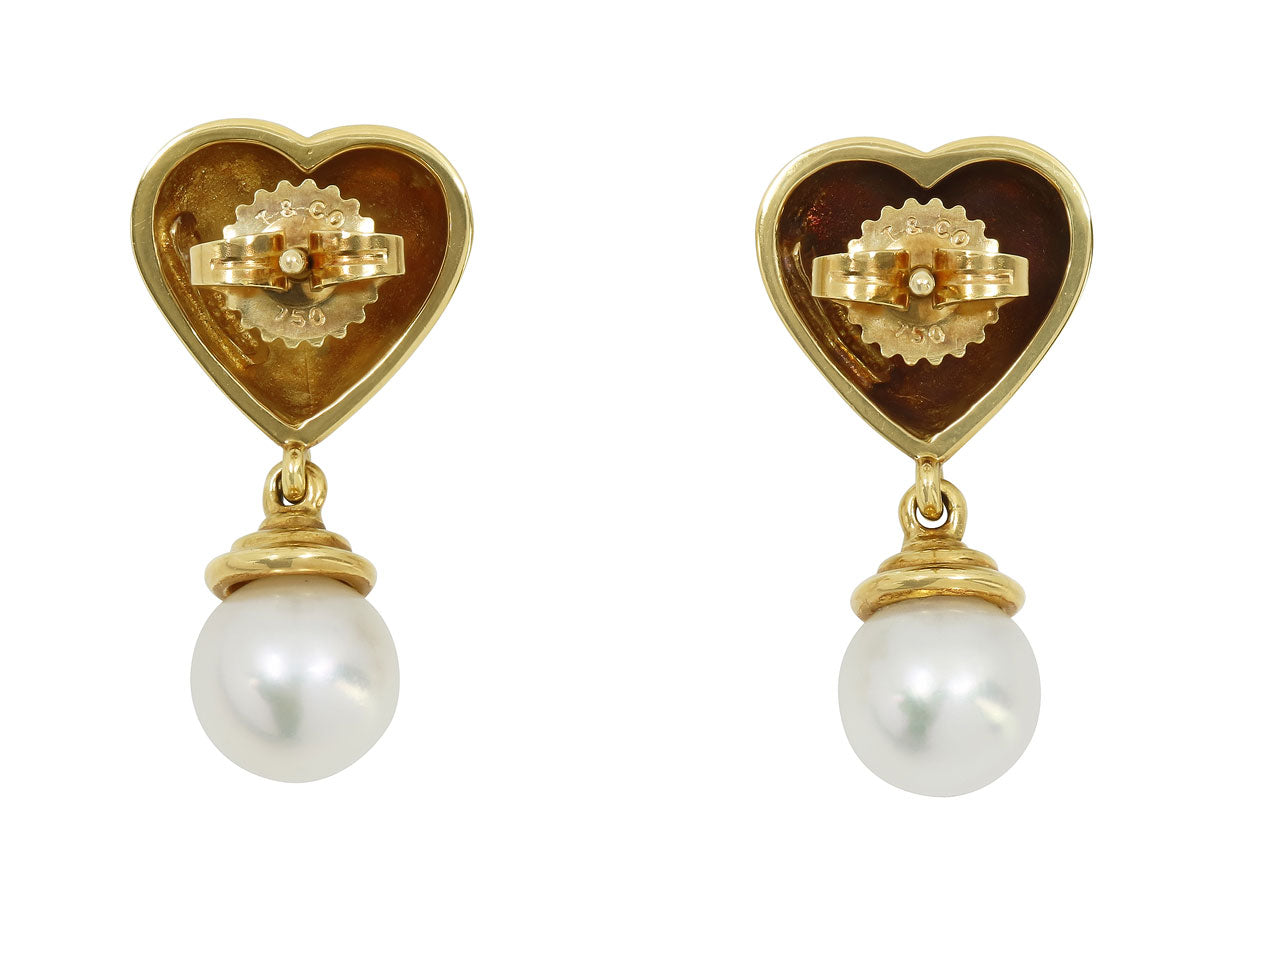 Tiffany & Co. Pearl and Heart Earrings in 18K Gold #516238